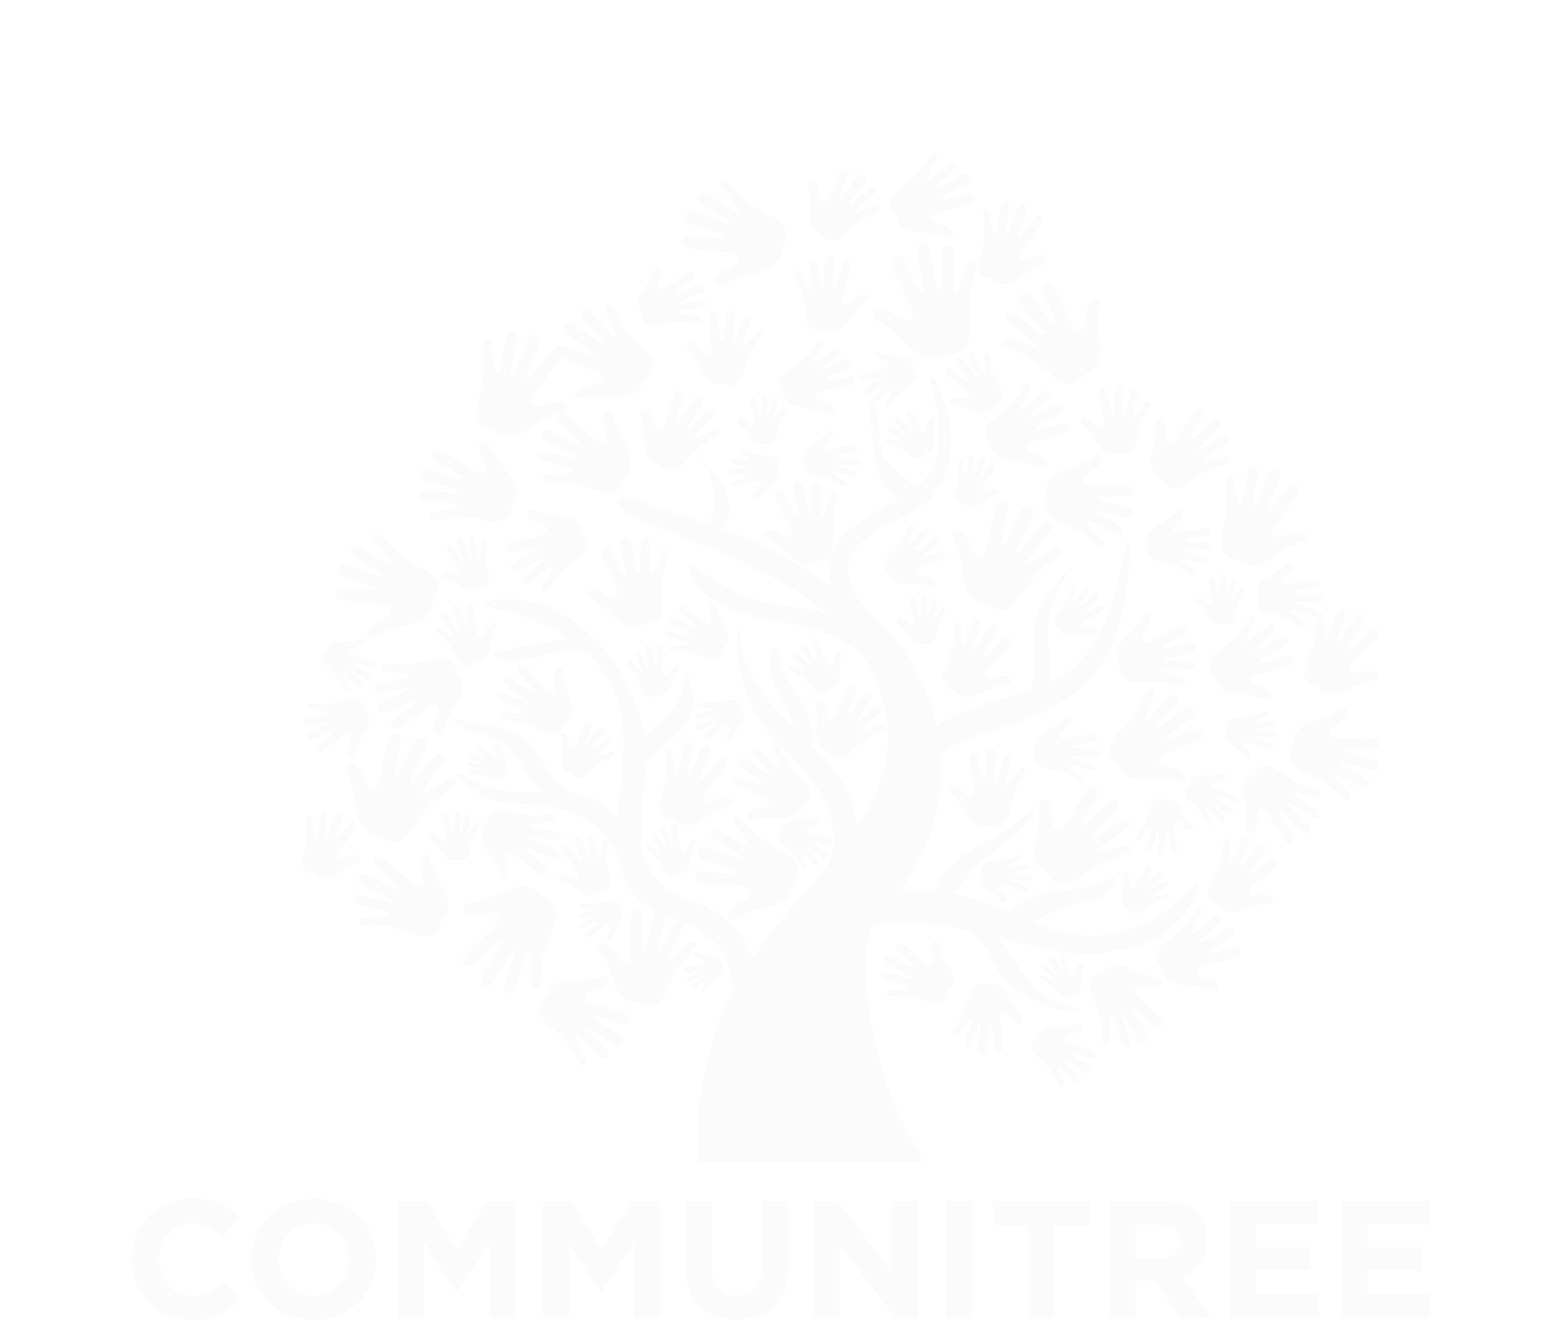 Communitree Logo